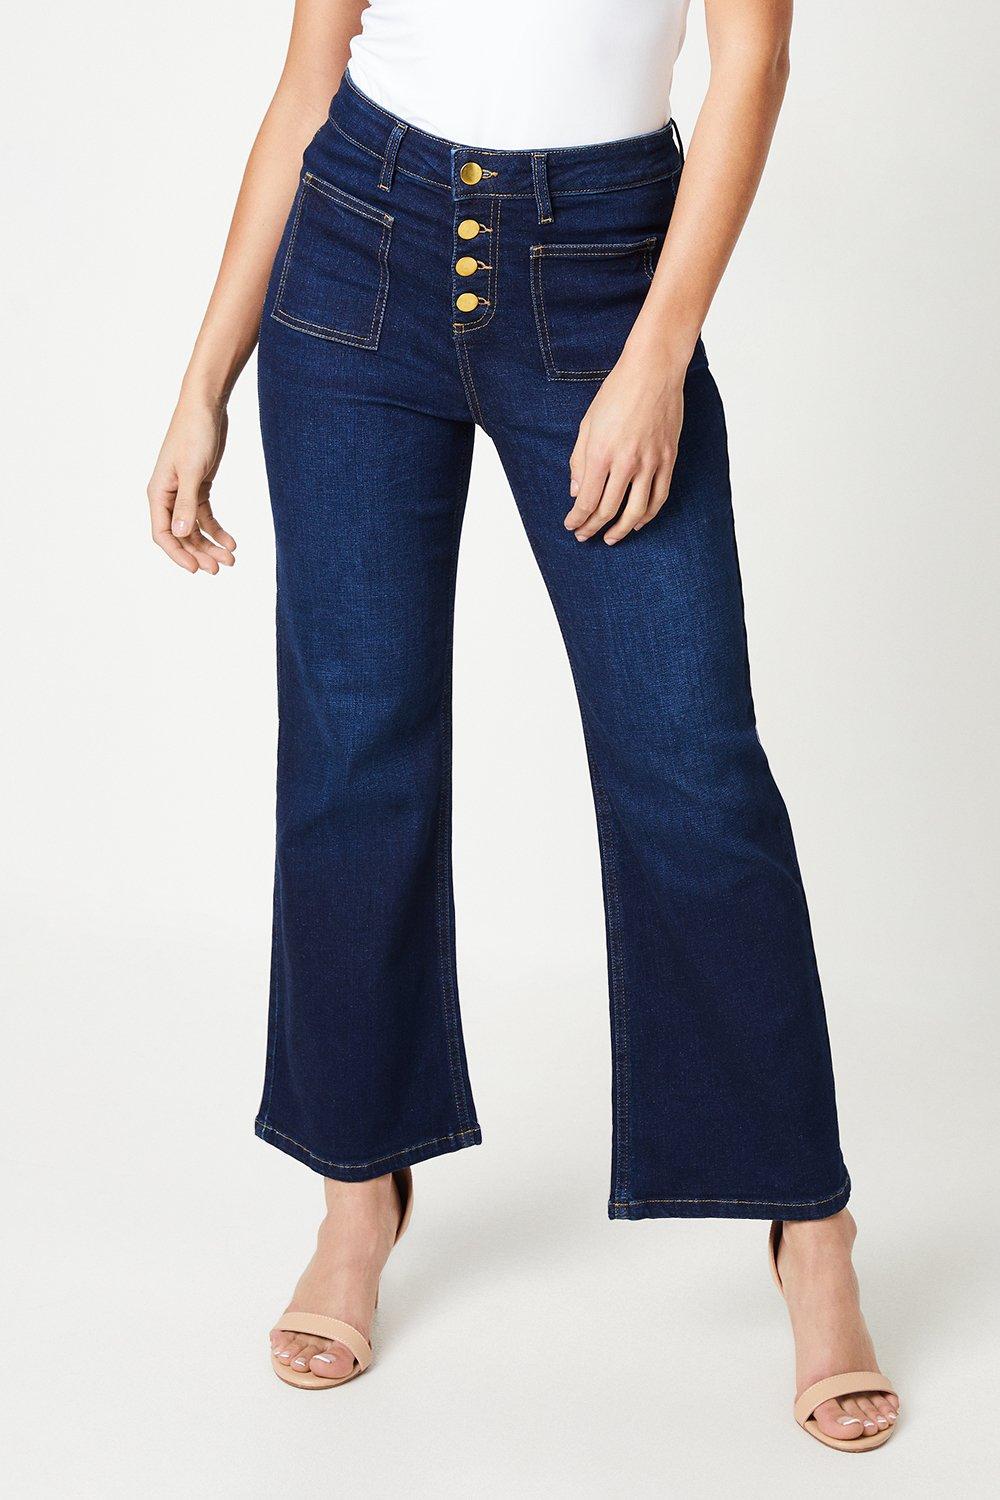 Women’s Petite High Rise Button Detail Patch Pocket Flare Jeans - dark indigo - 10